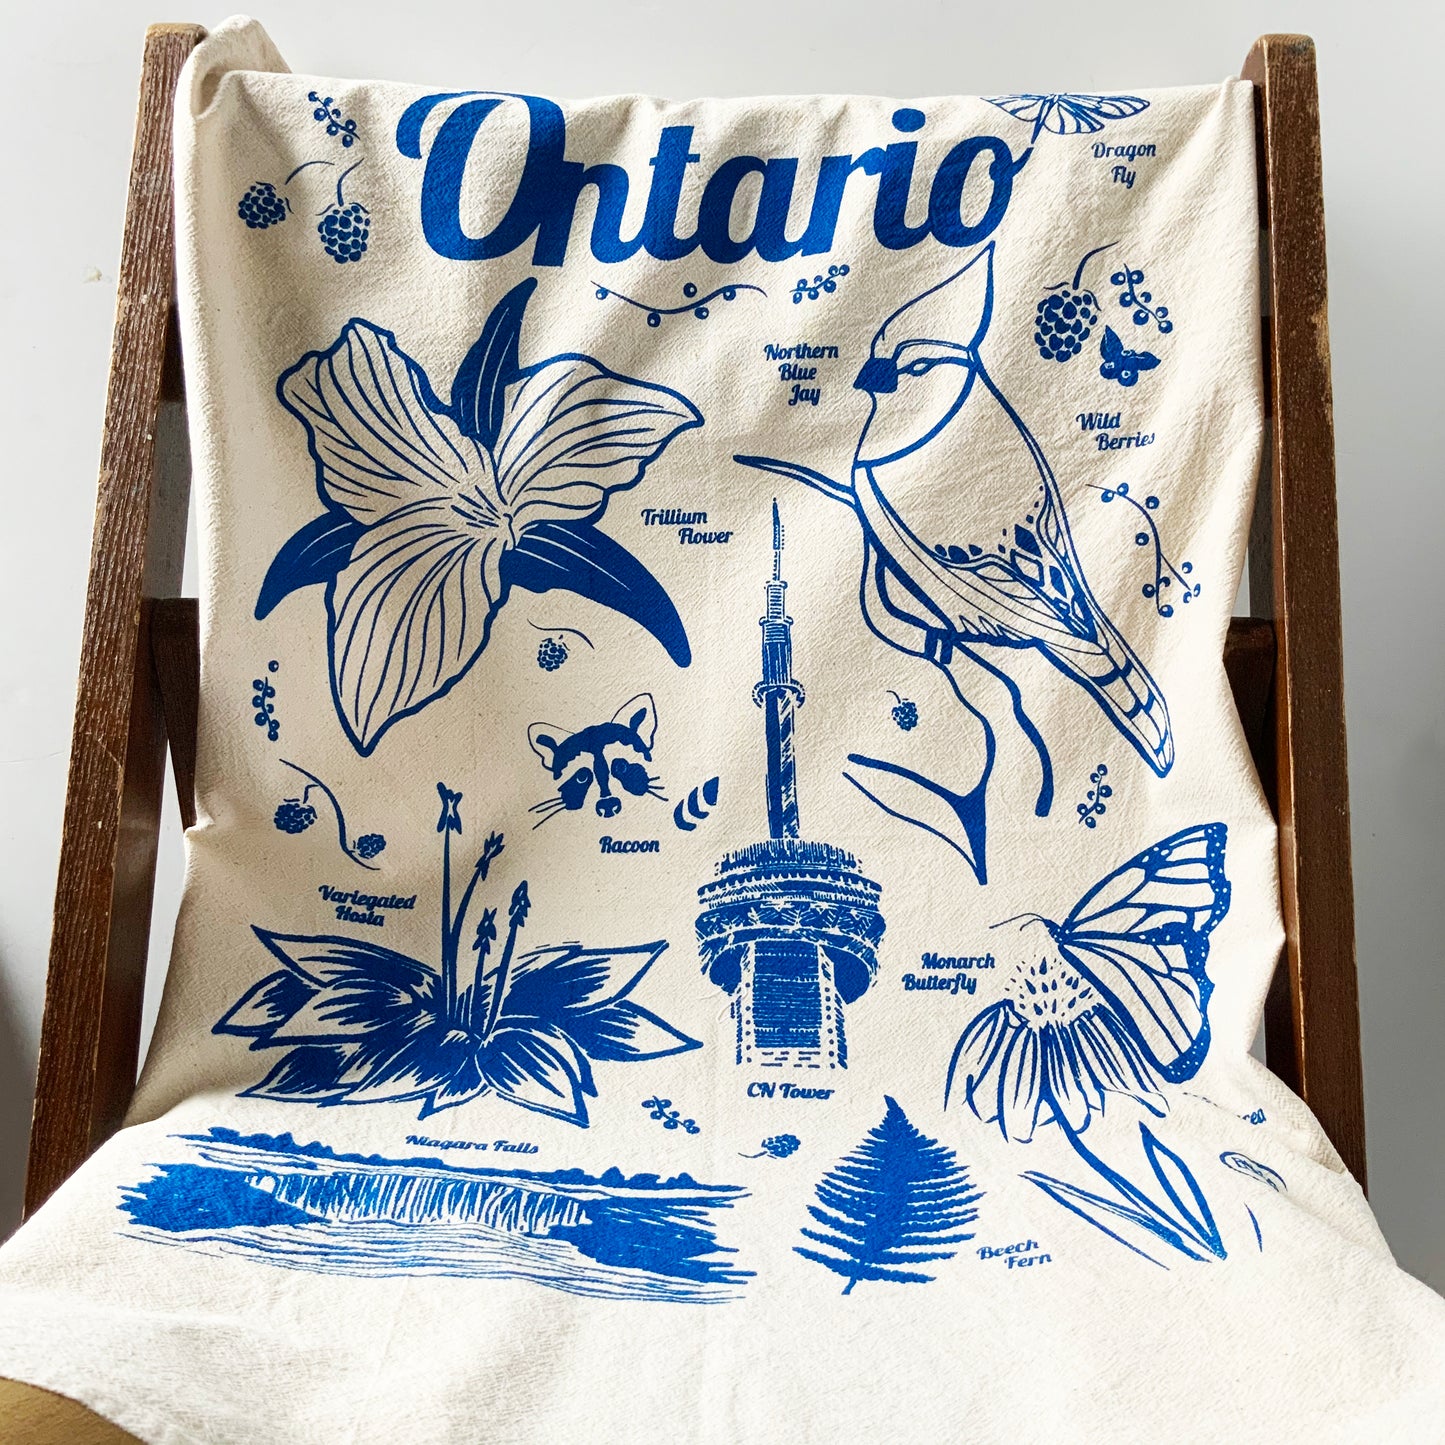 Ontario Commemorative Hand Printed Organic Tea Towel